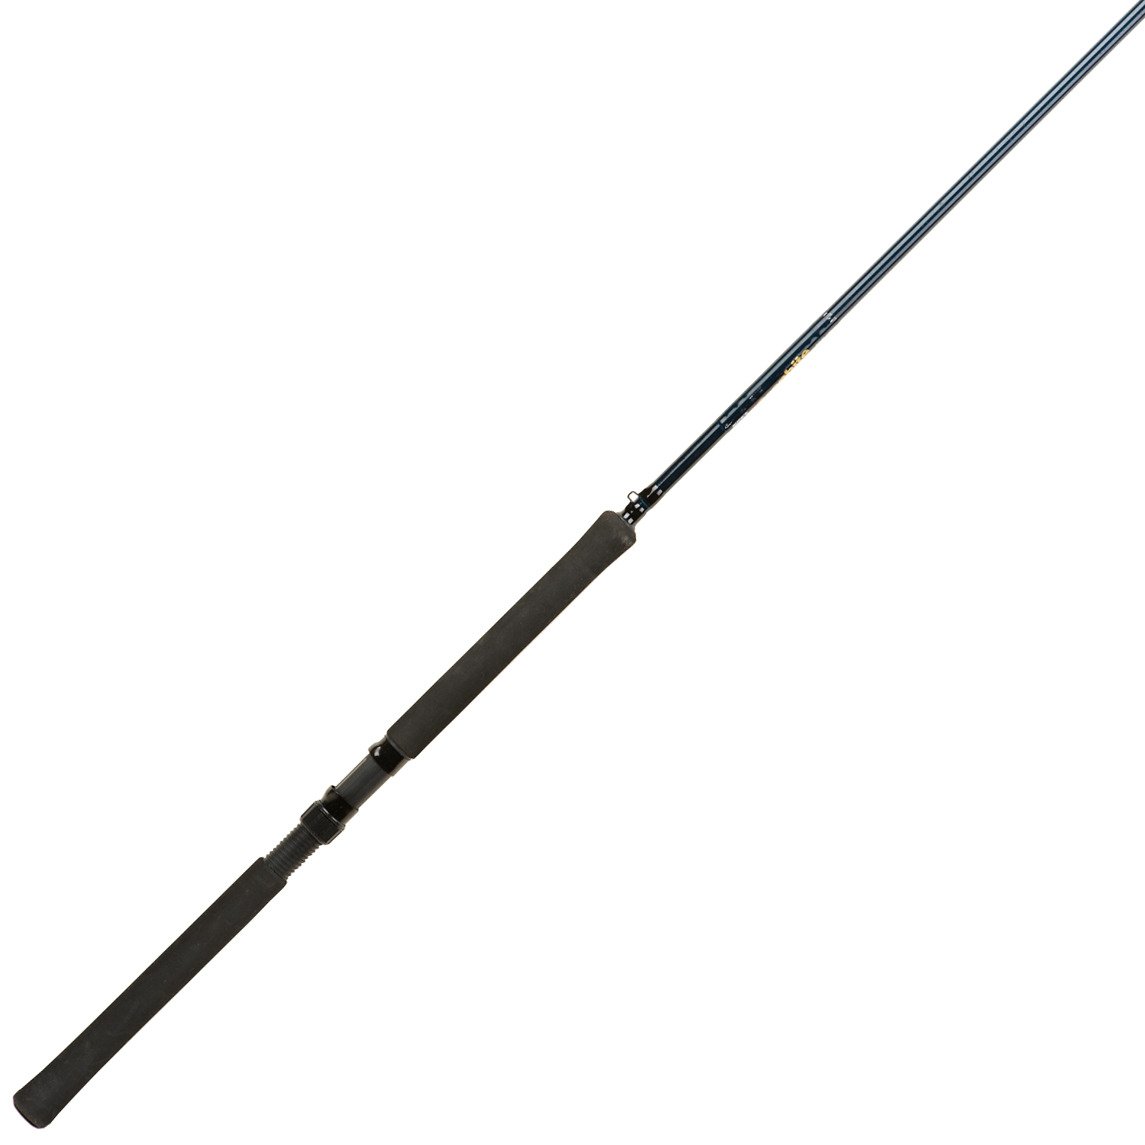 B 'n' M Buck's 11' Freshwater Graphite Panfish Rod